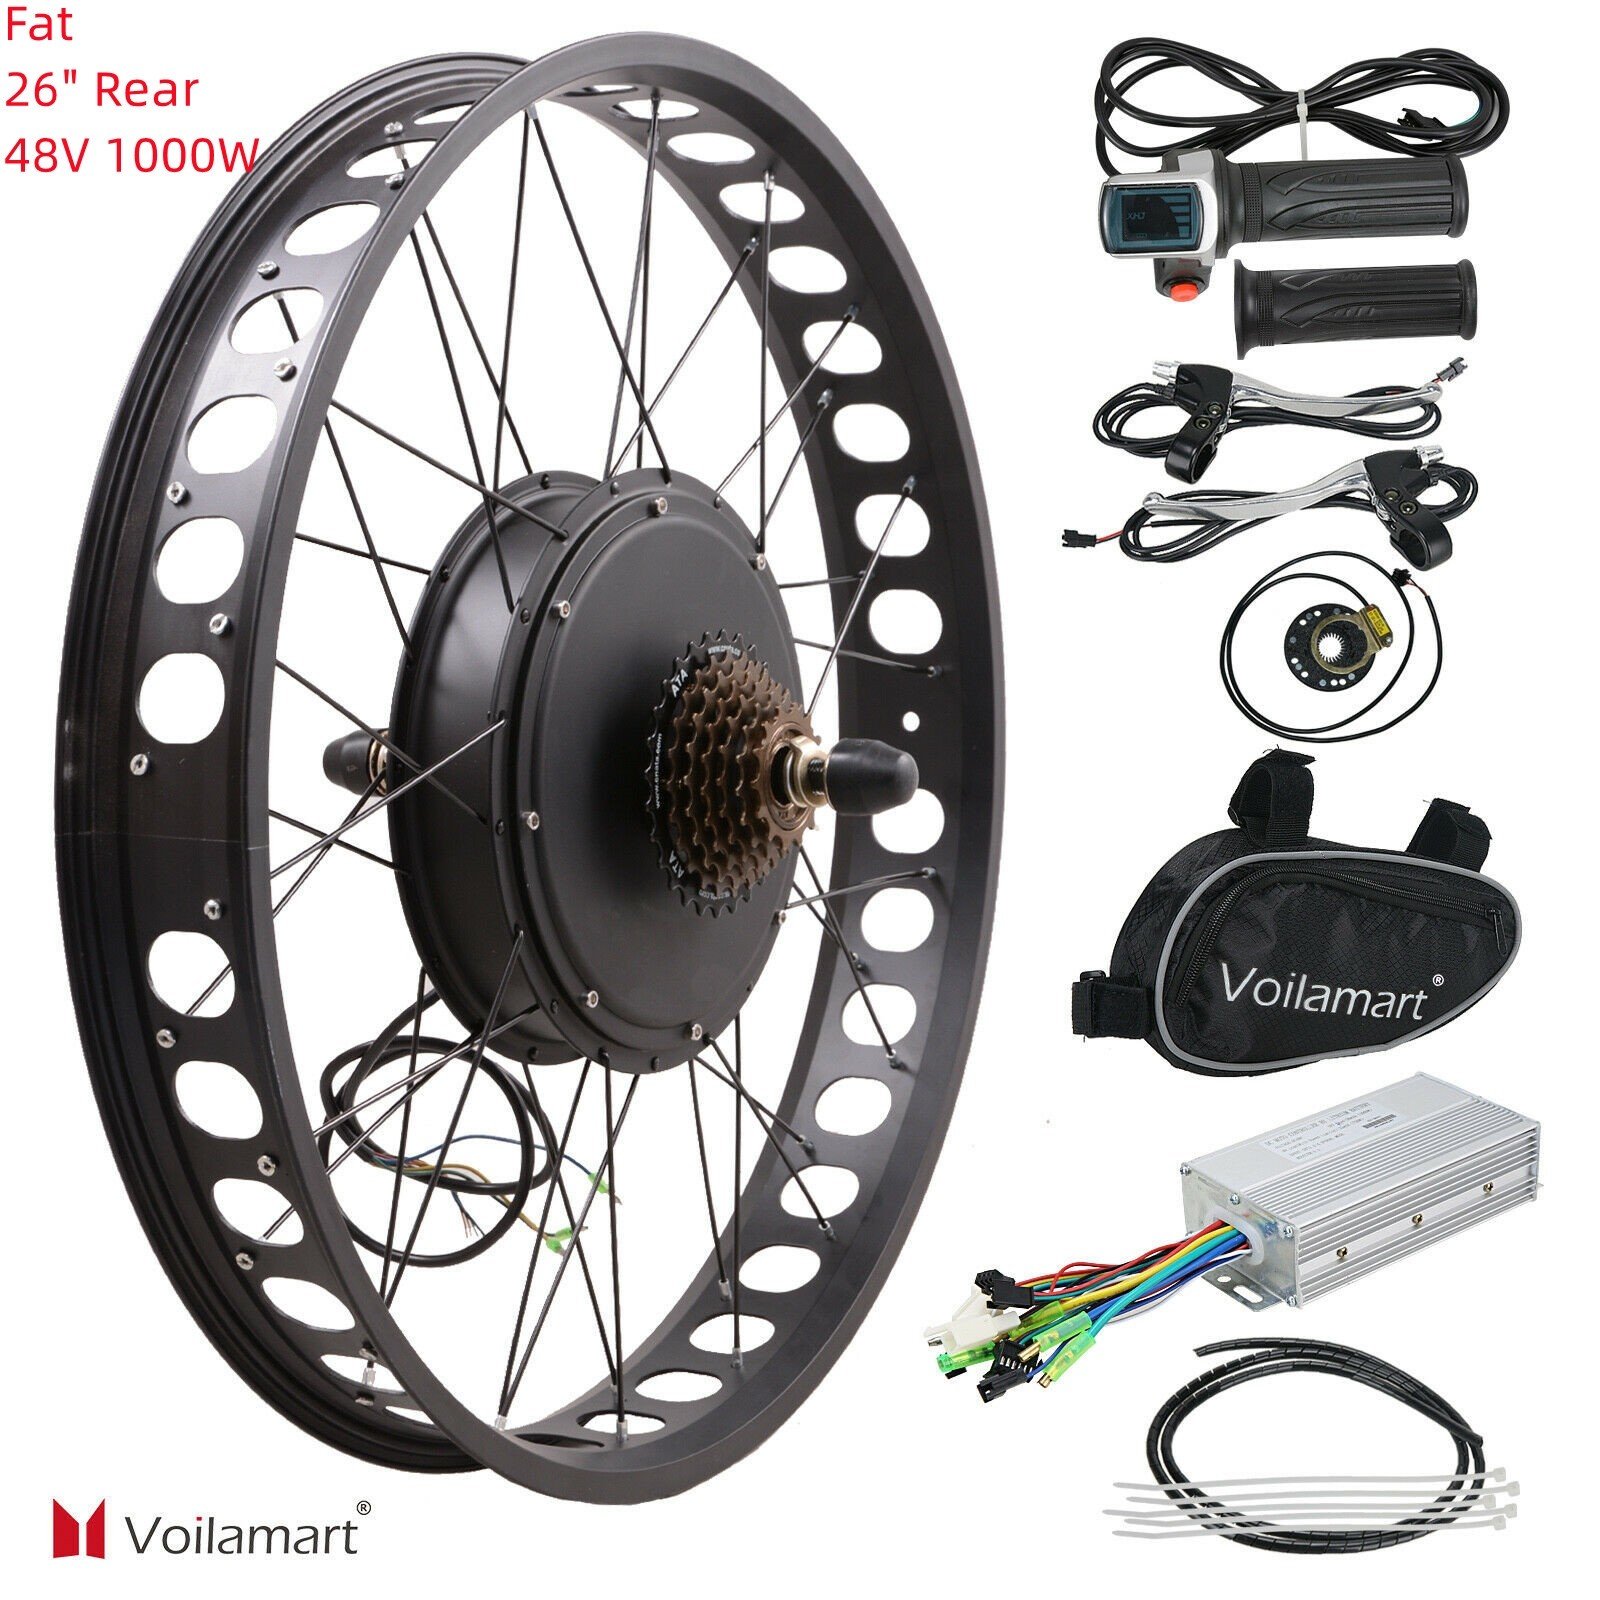 Voilamart Ebike Conversion Kit 26 Rear Wheel 48V 1000W Electric